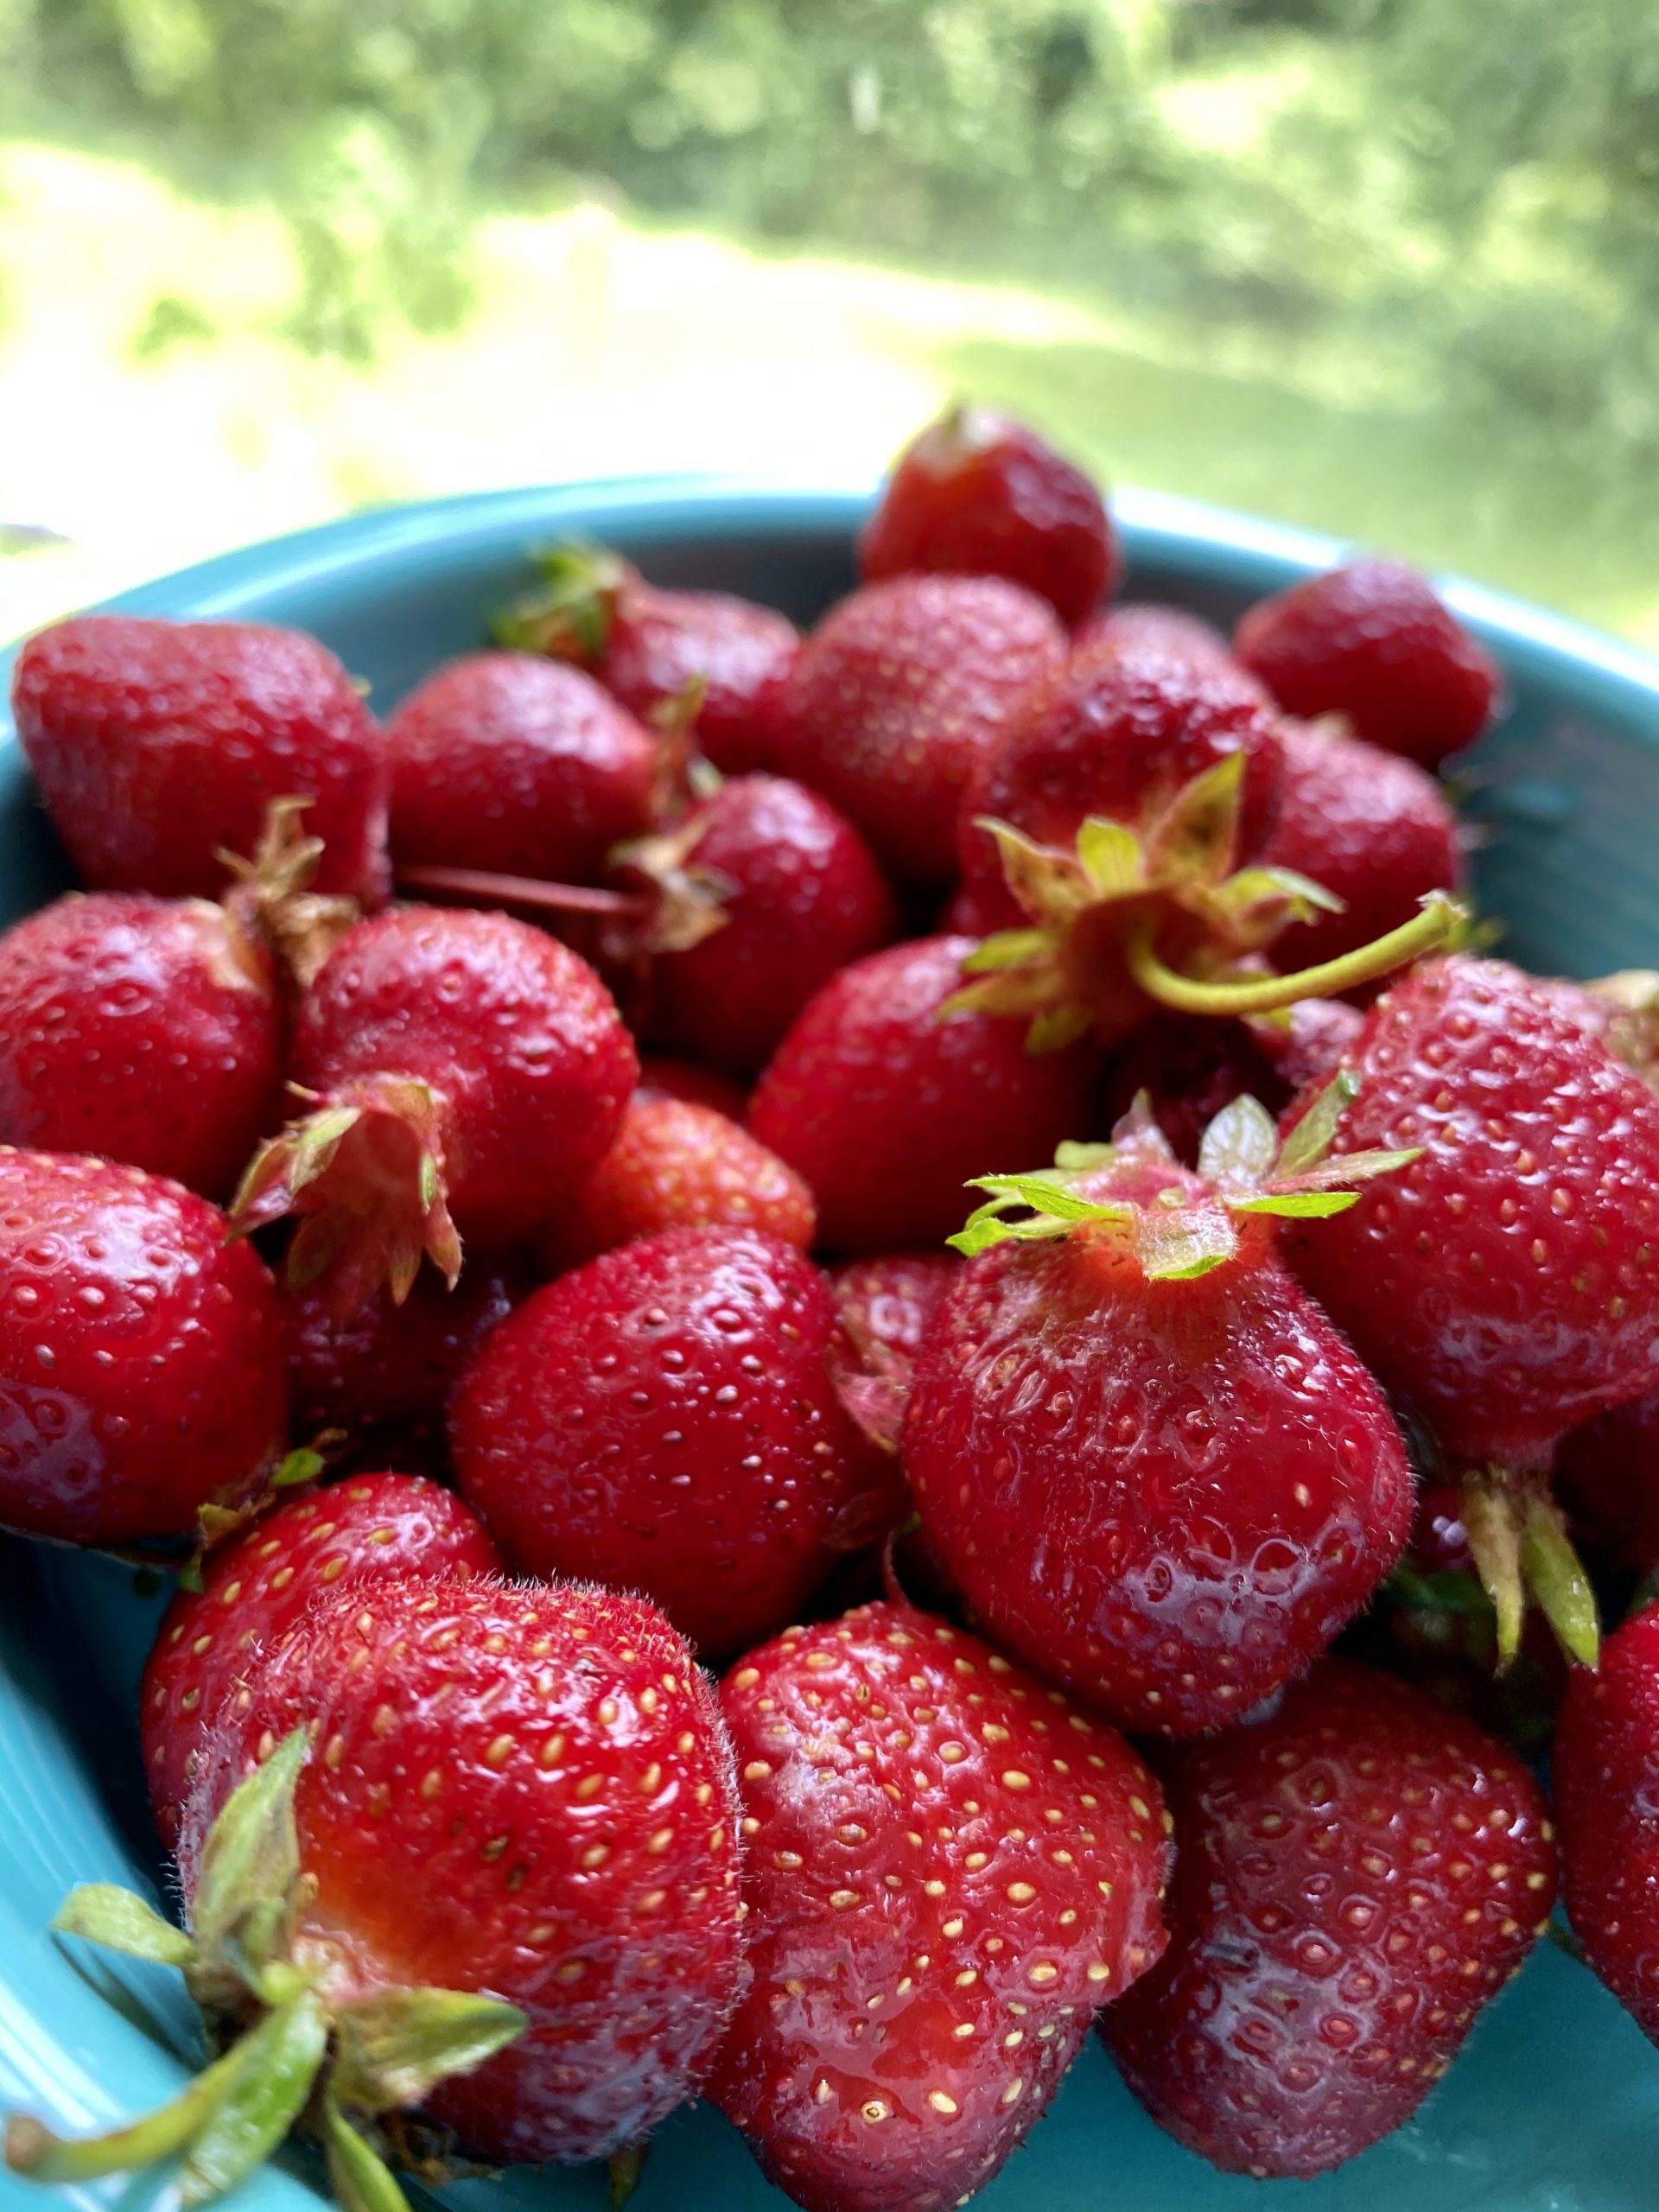 WV strawberries